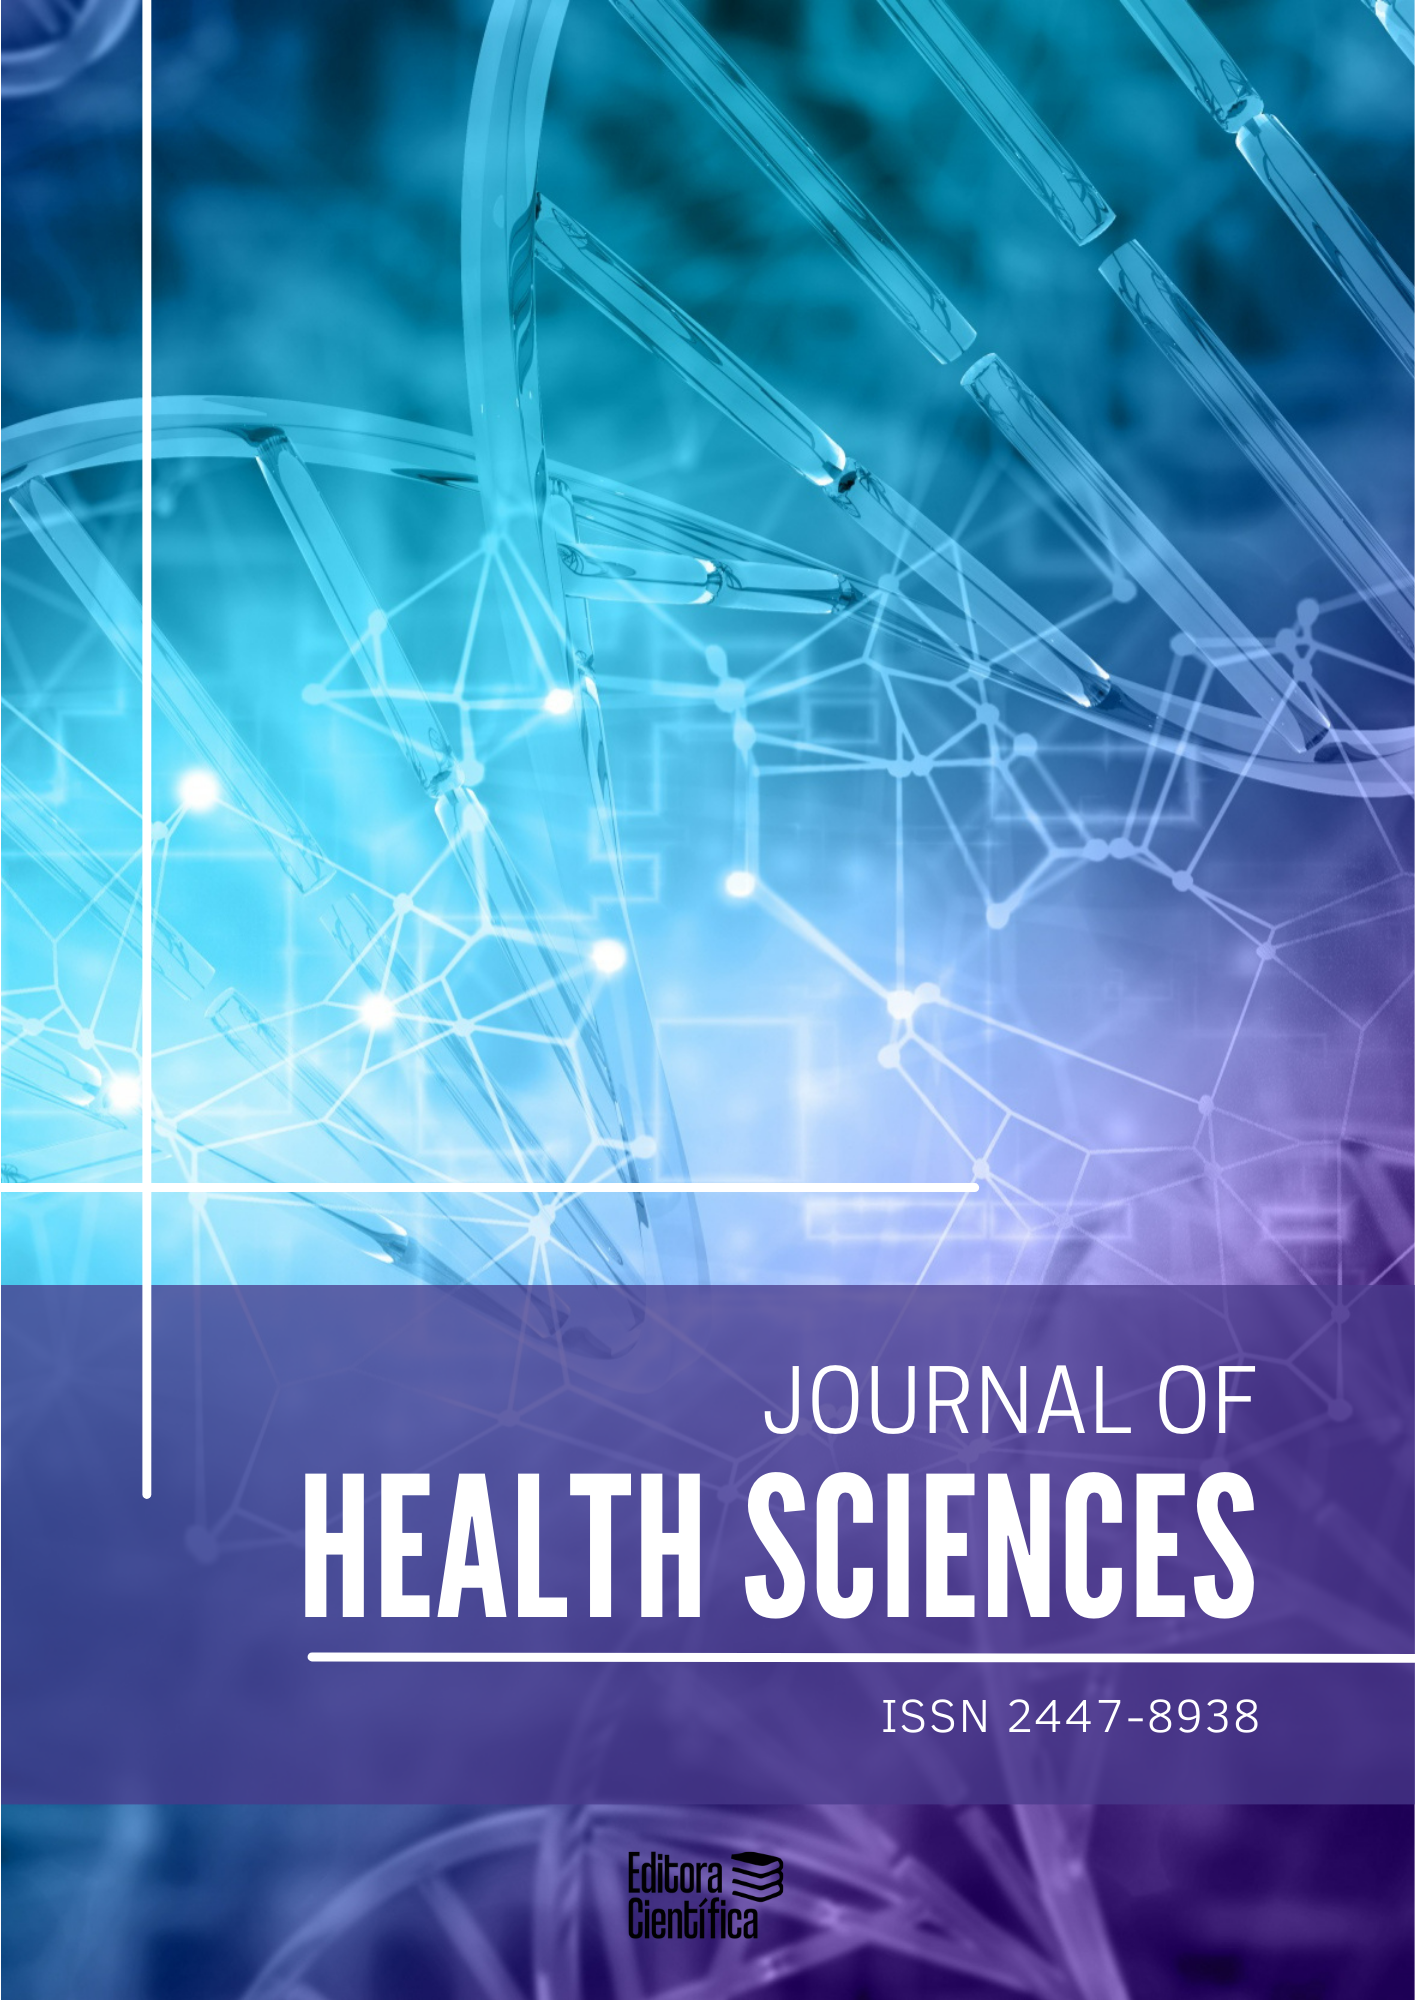 Journal of Health Sciences